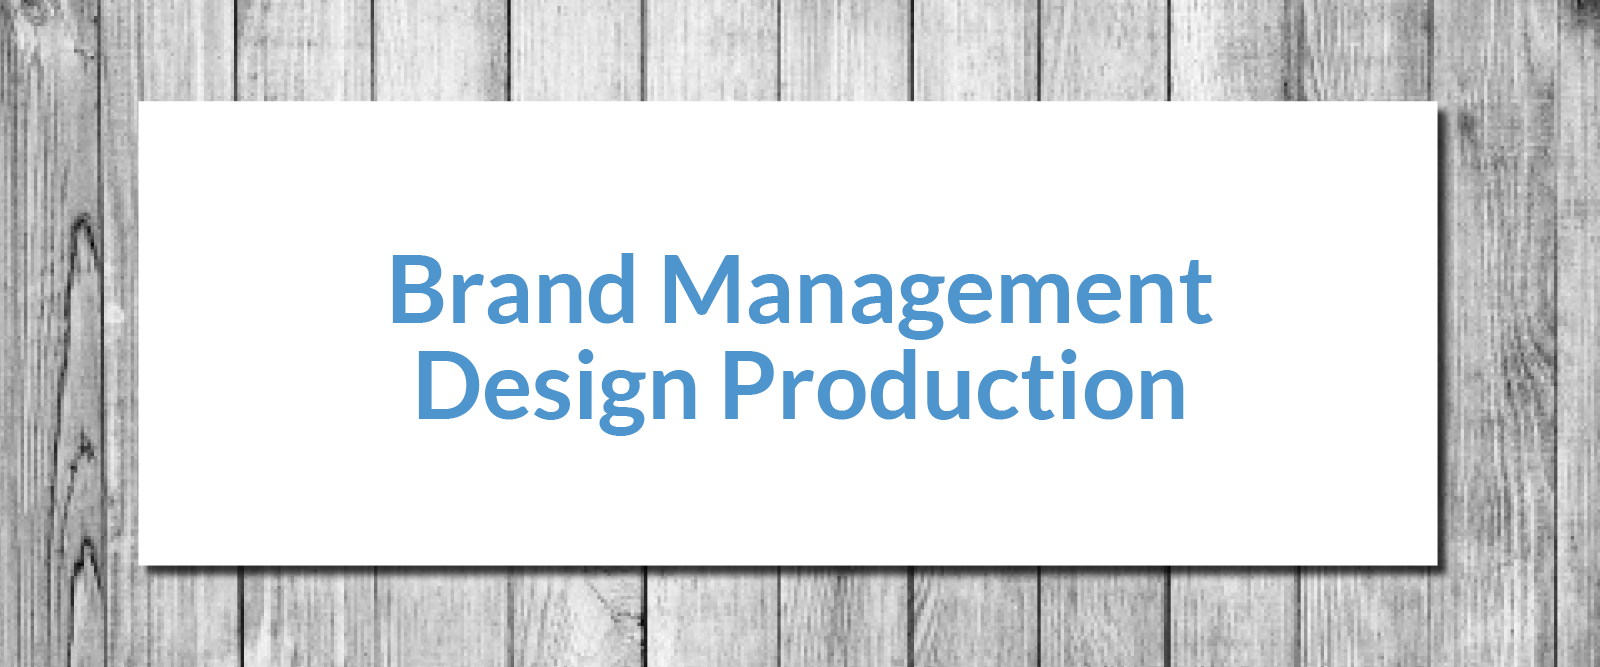 Brand Management, Design Production